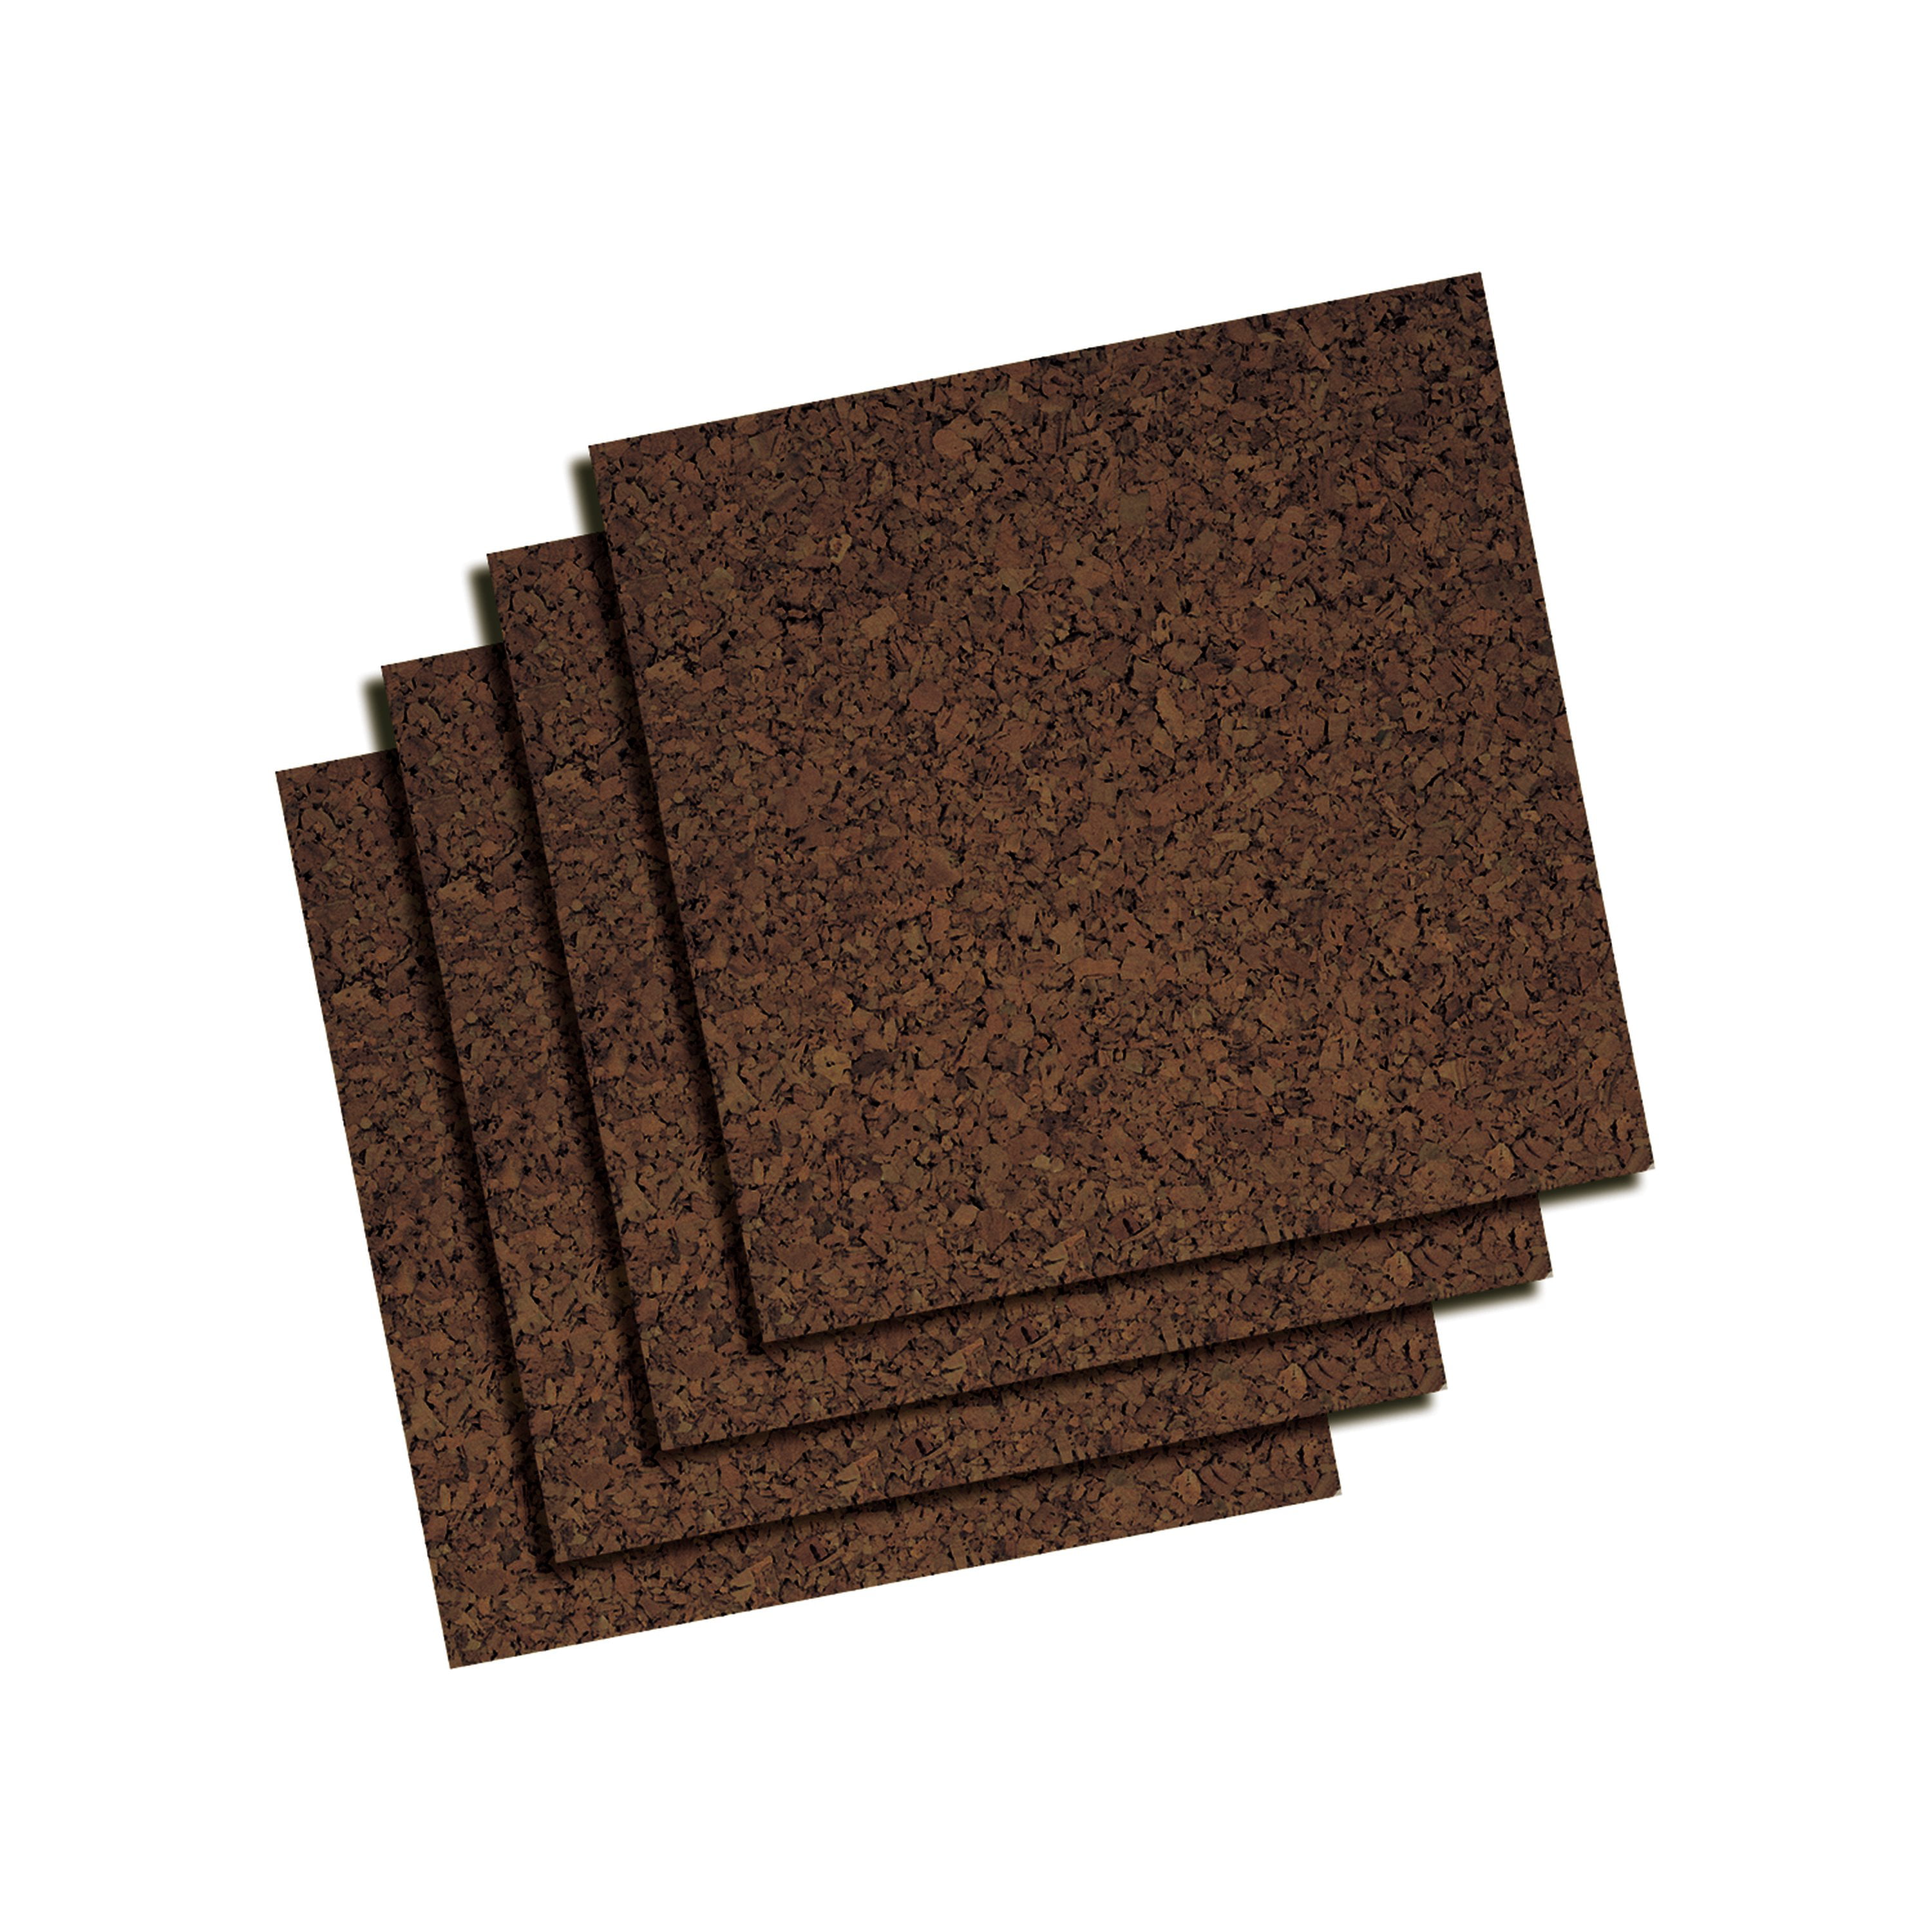 Board Holder Bulletin 12x12 New Sealed Quartet Cork Natural Tiles 2 Packs of 4 